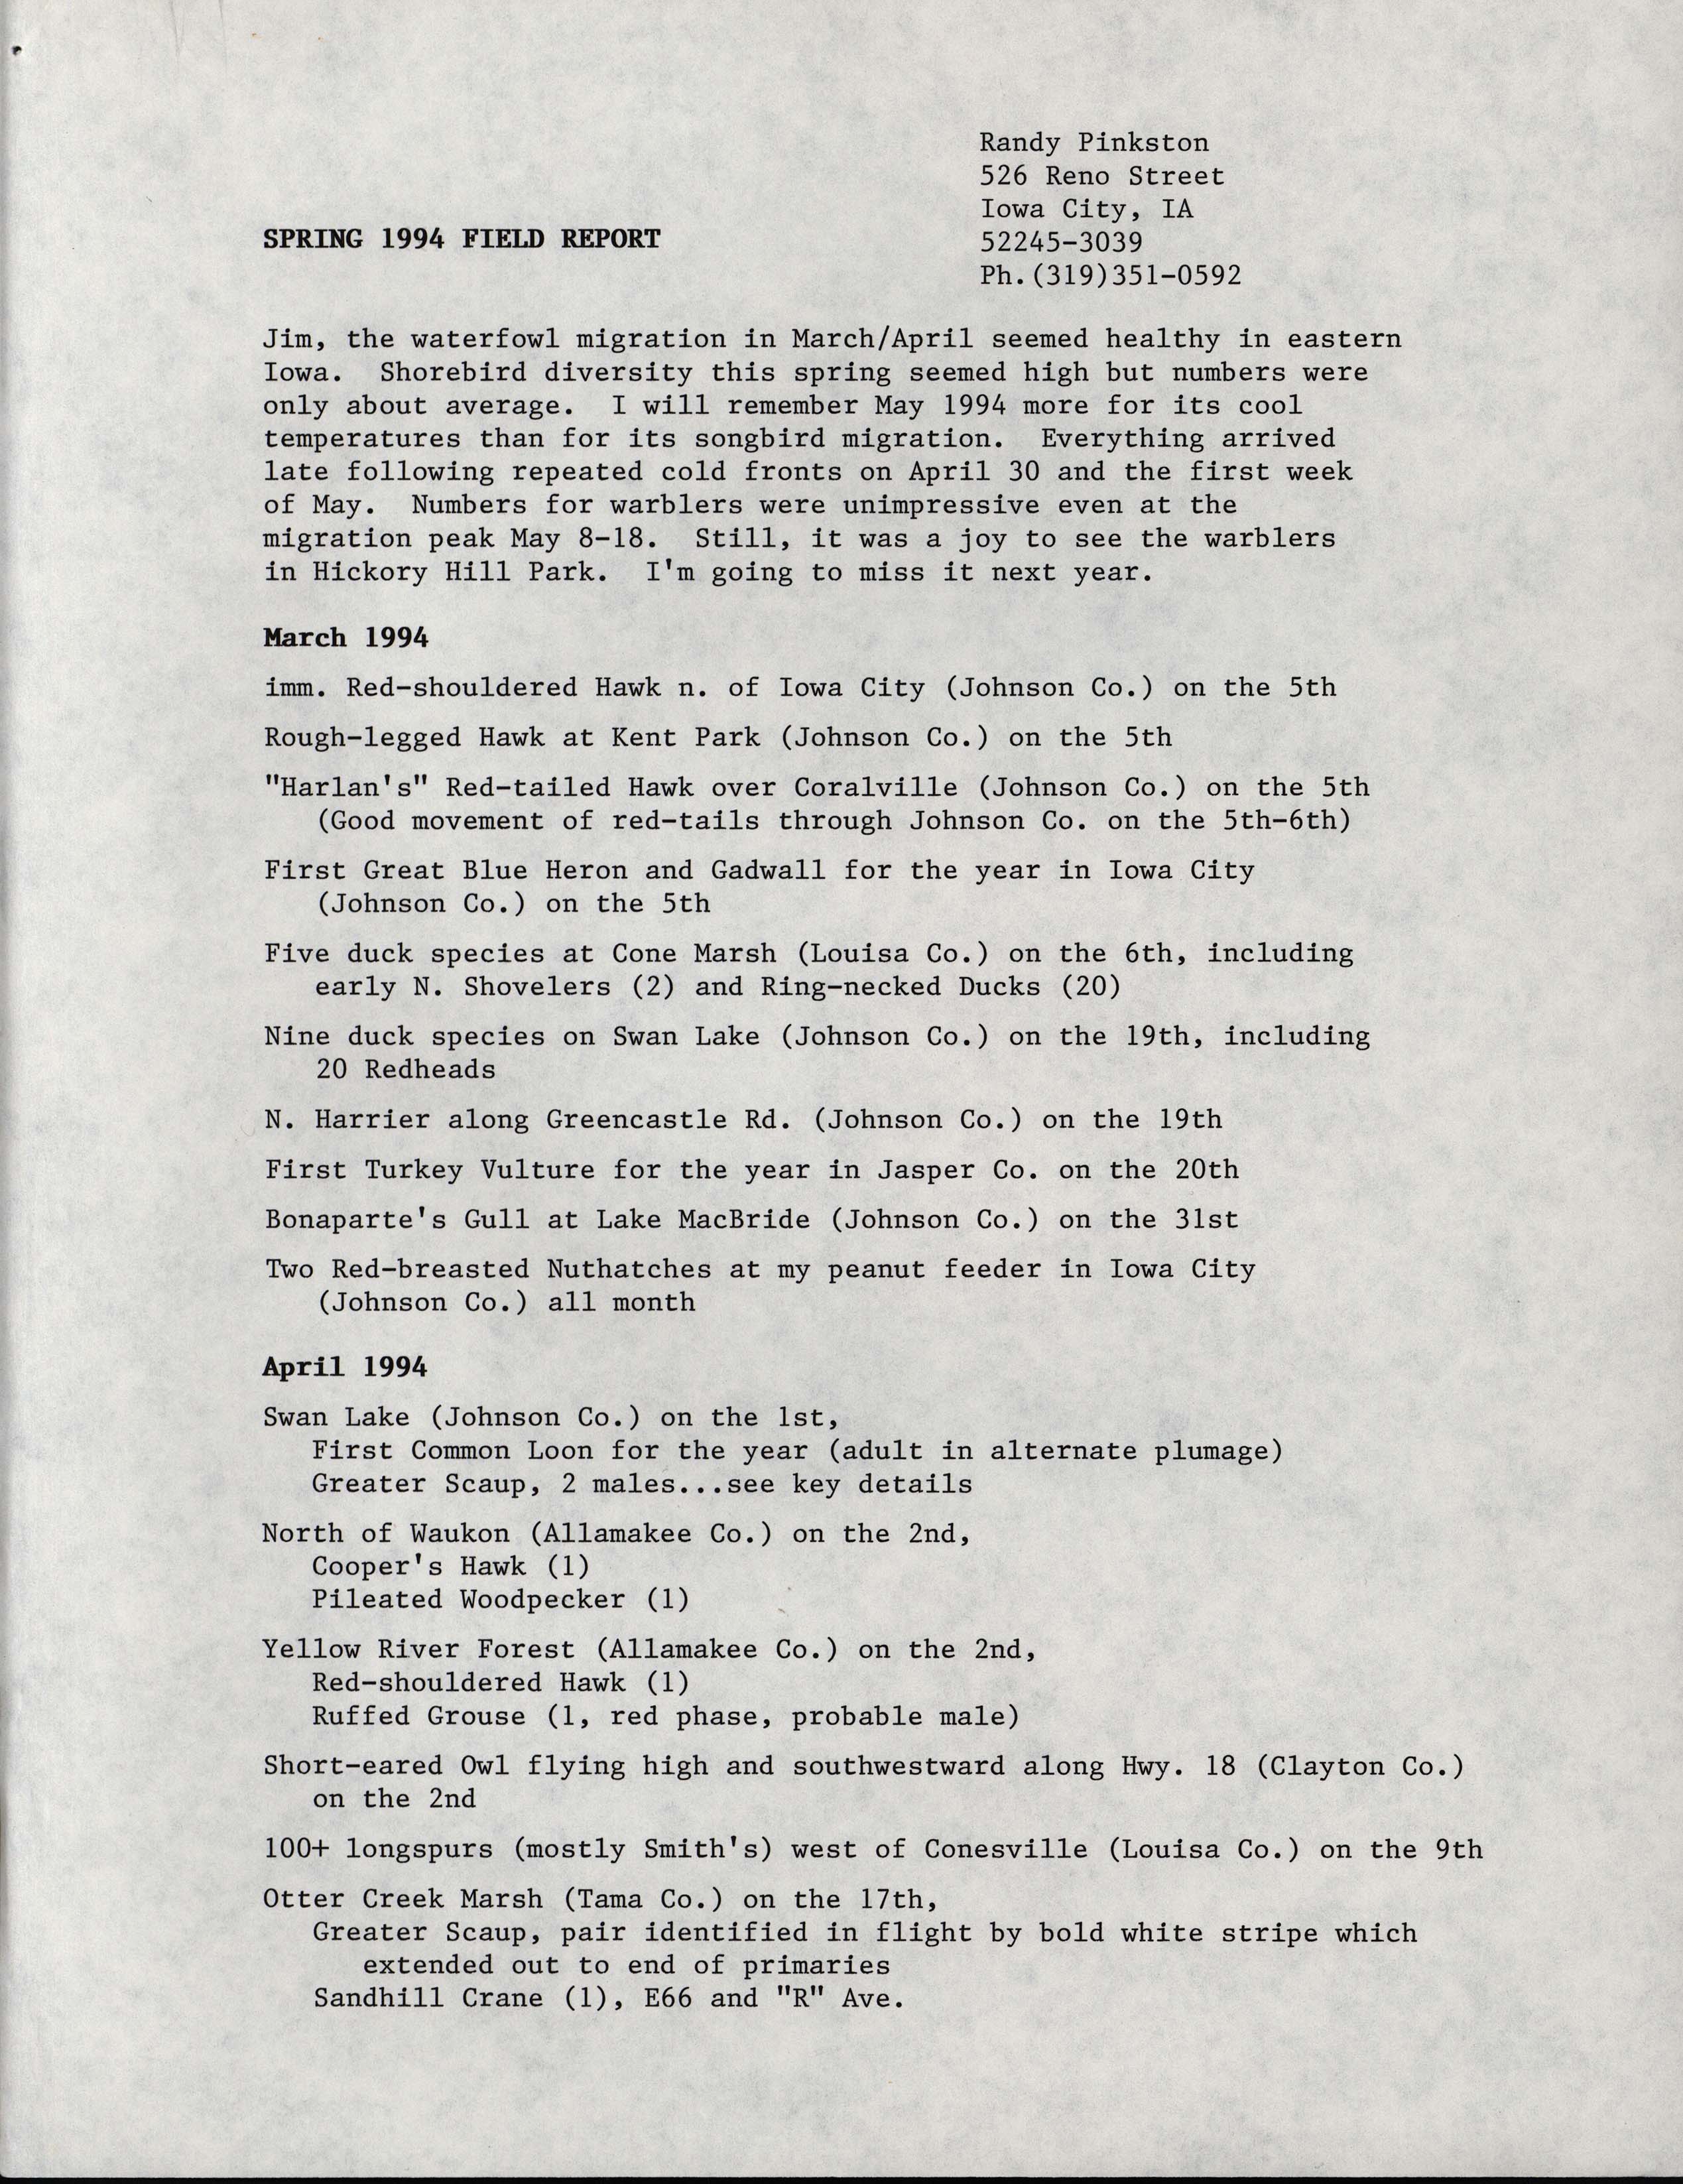 Spring 1994 field report, Randy Pinkston